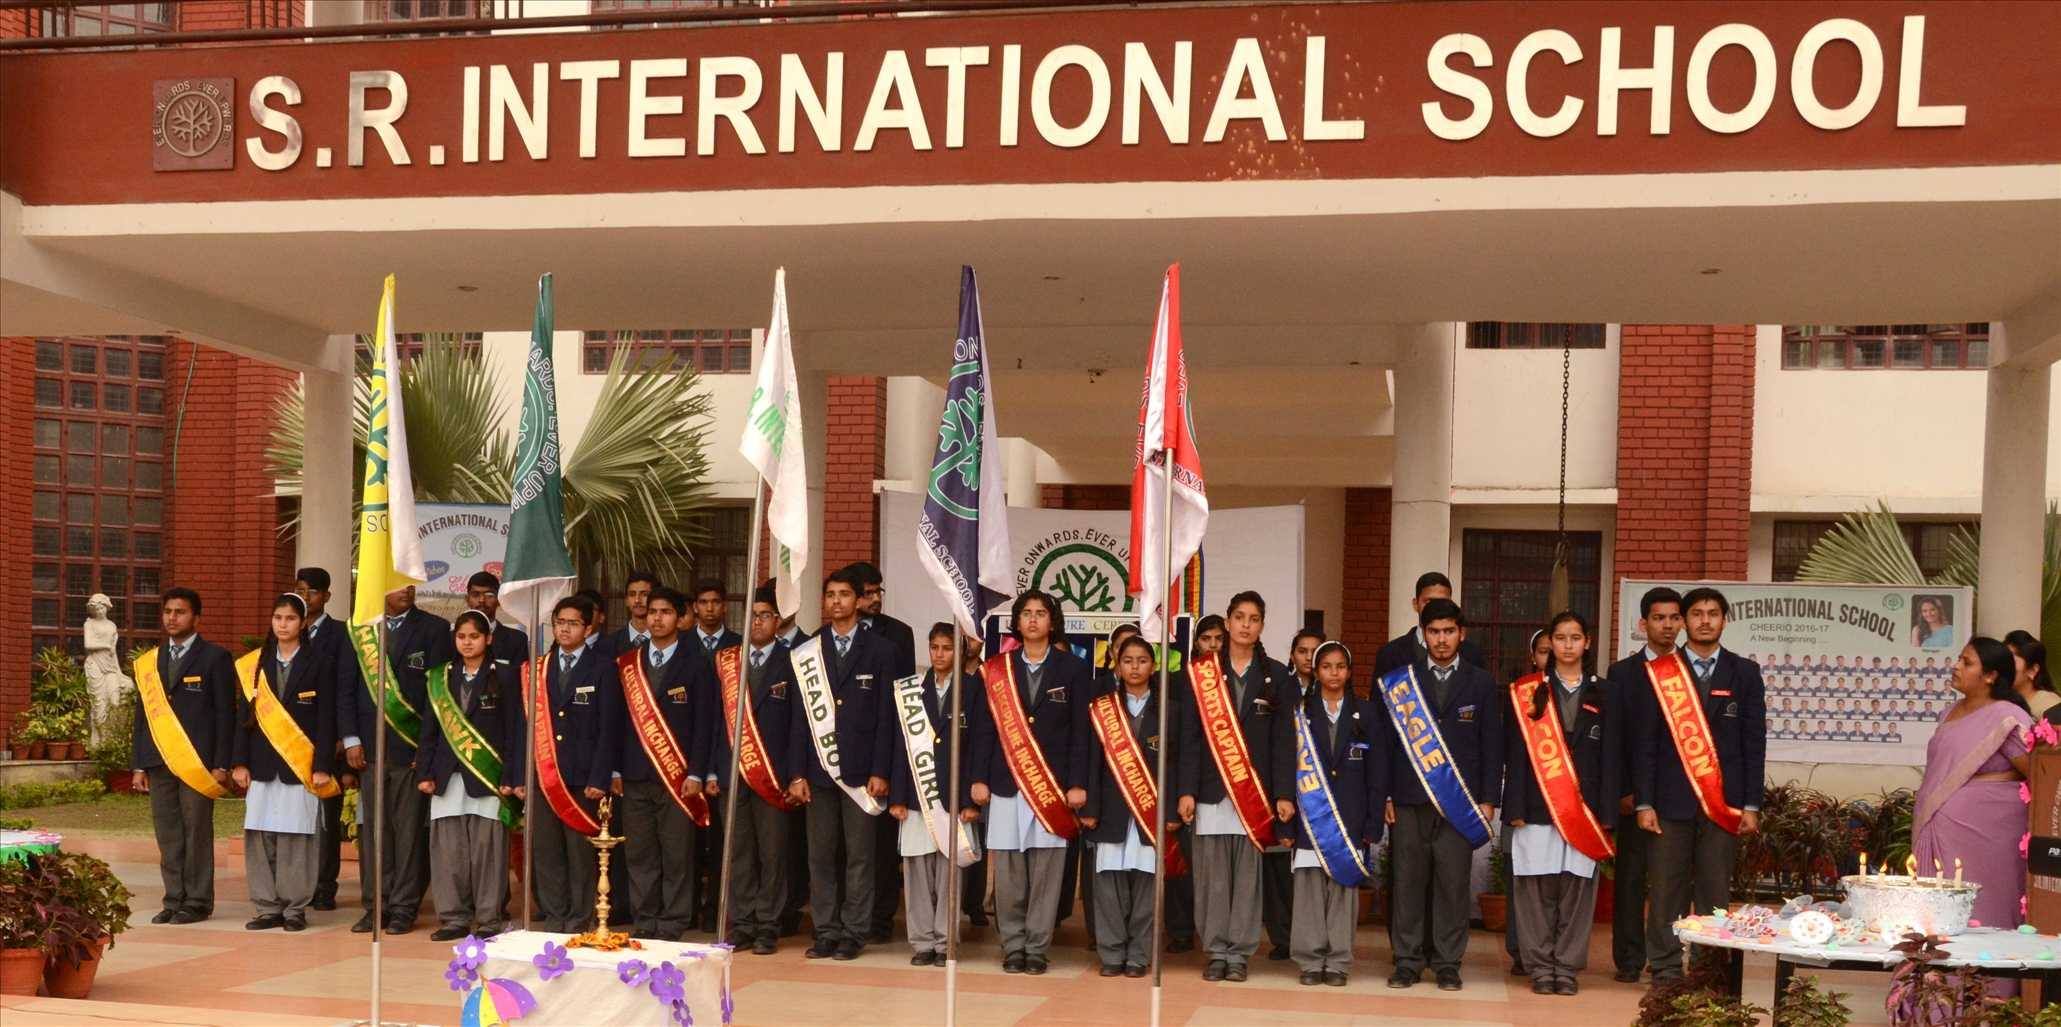 S.R. INTERNATIONAL SCHOOL